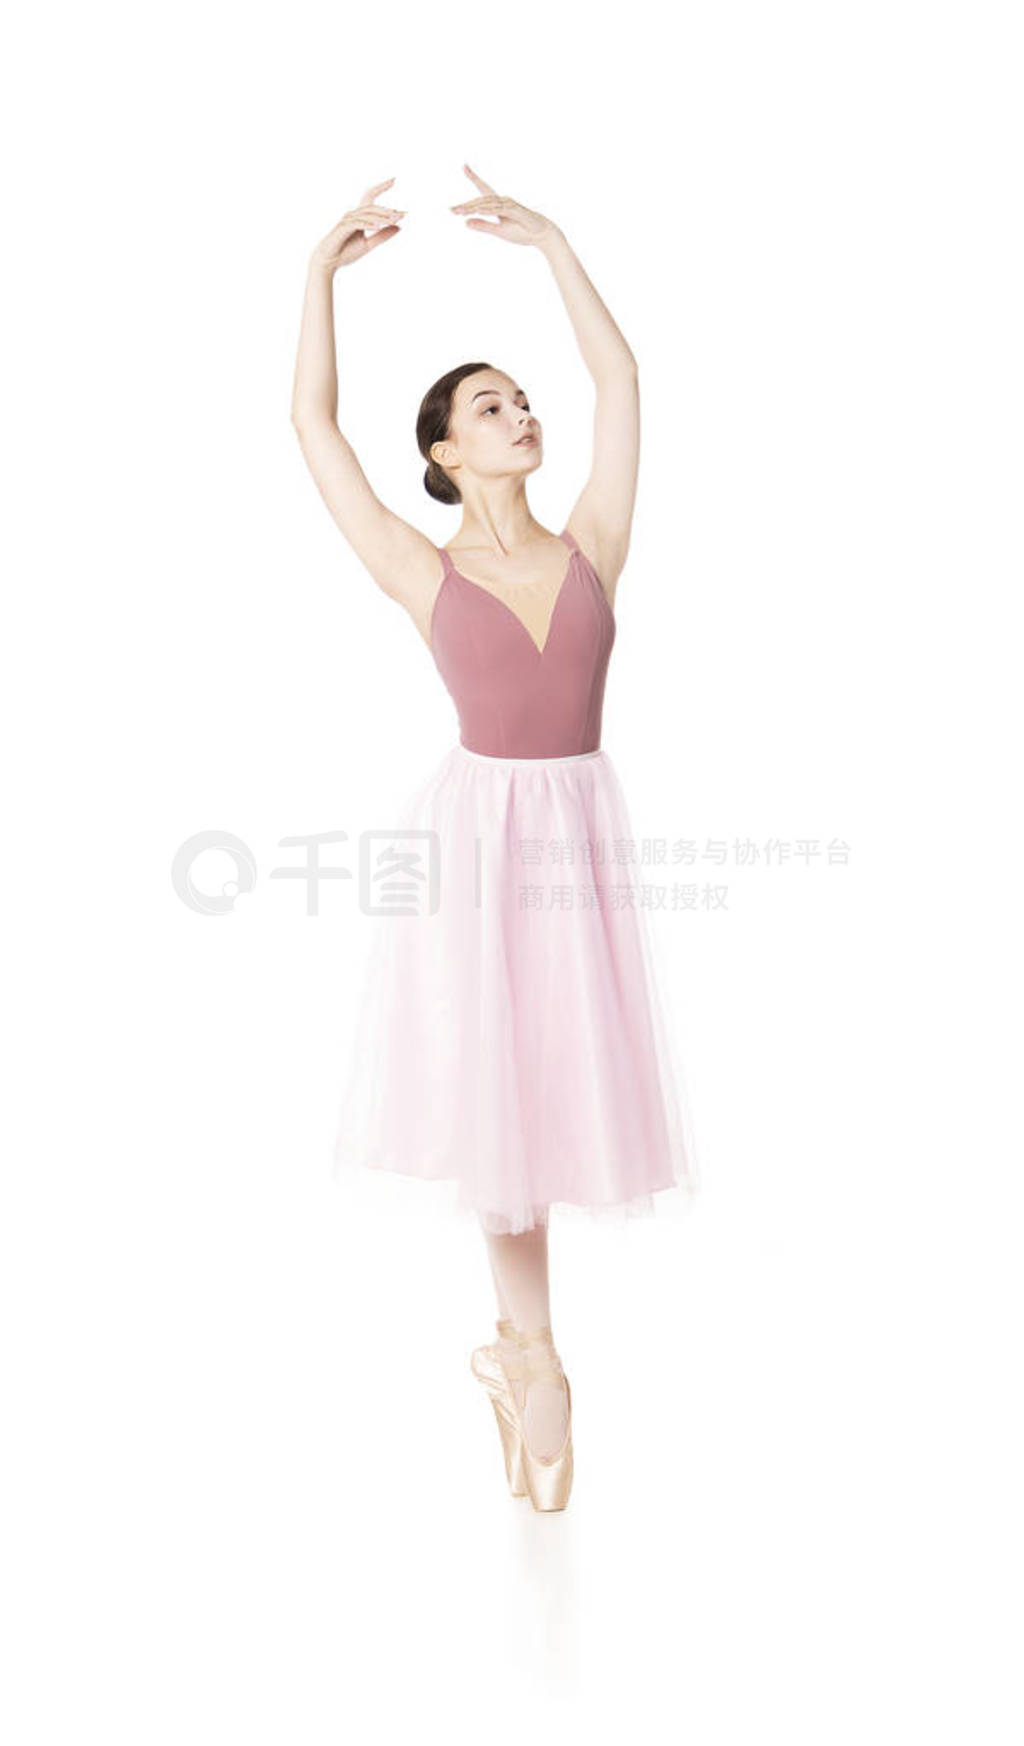 Elegant girl in a pink skirt and beige top dancing ballet.